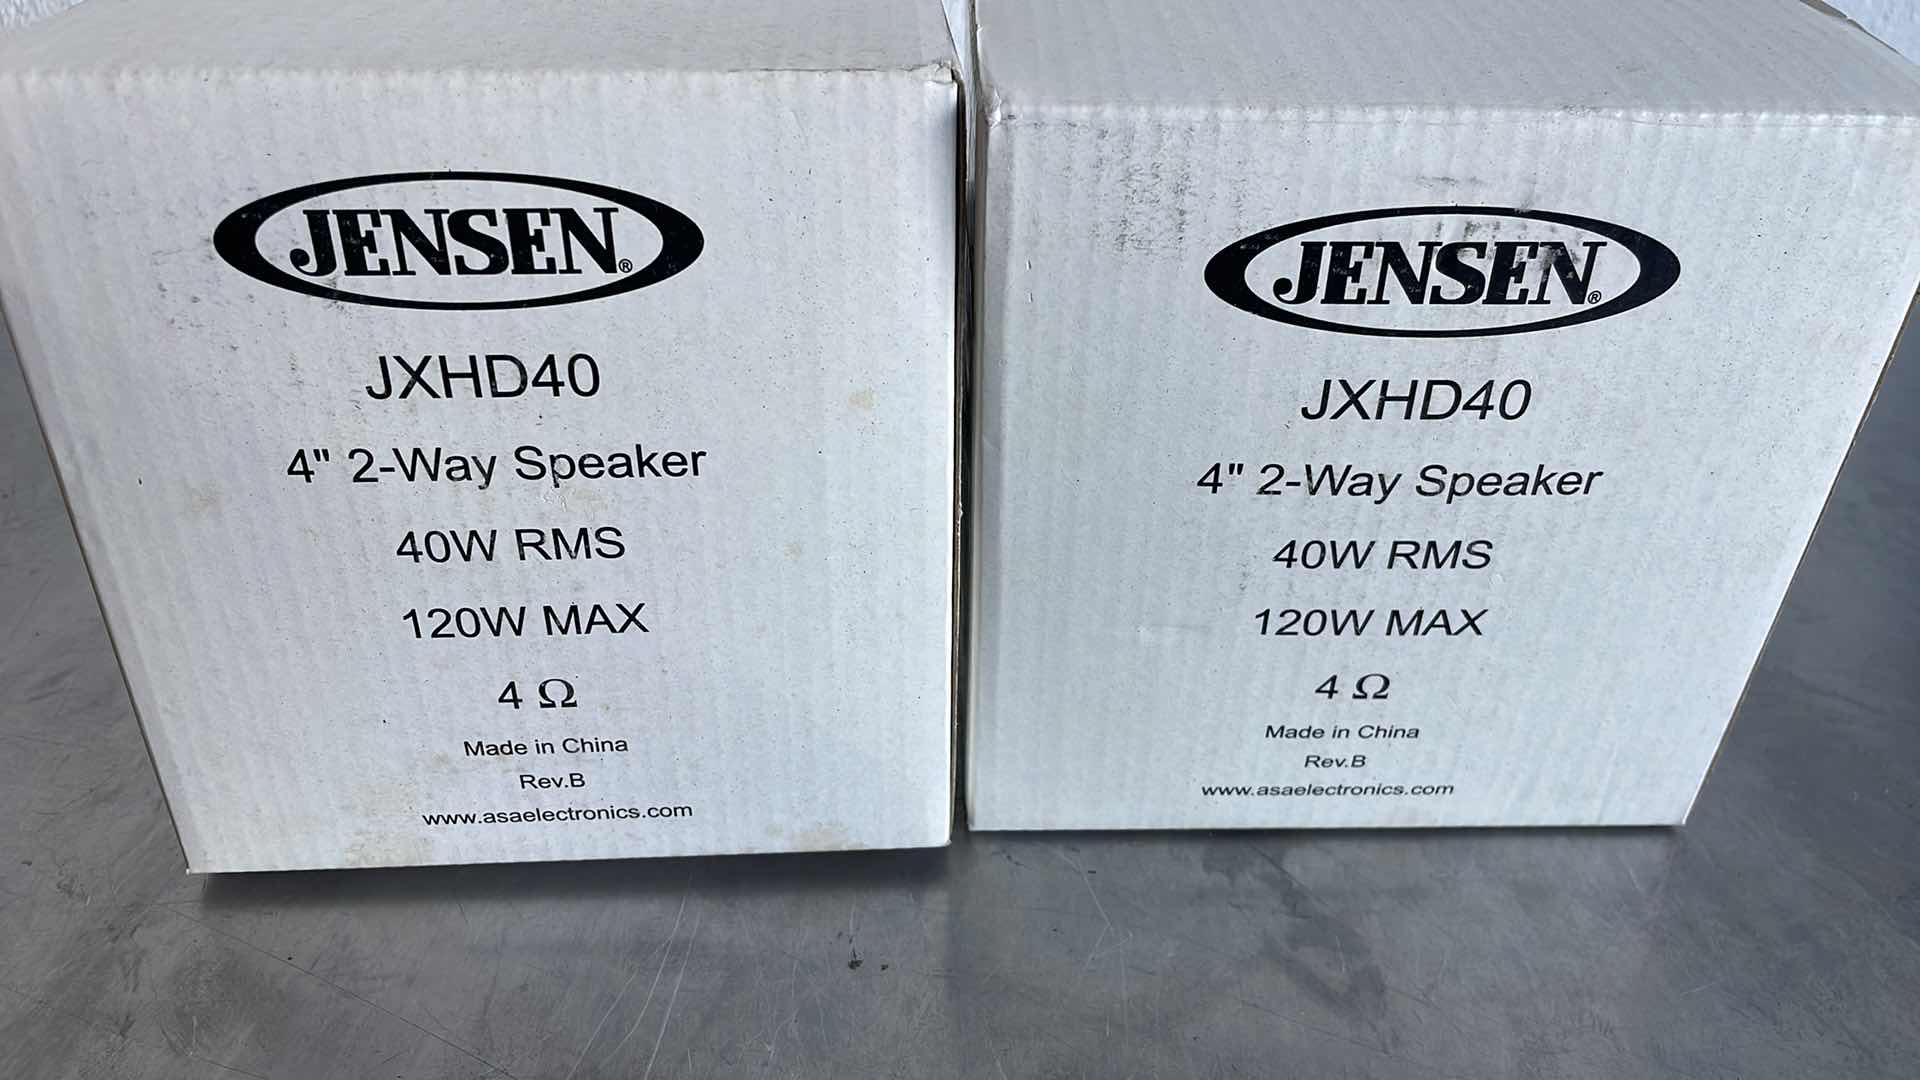 Photo 1 of JENSEN JXHD40 4" 2-Way Speaker 40W RMS 120W MAX (6)